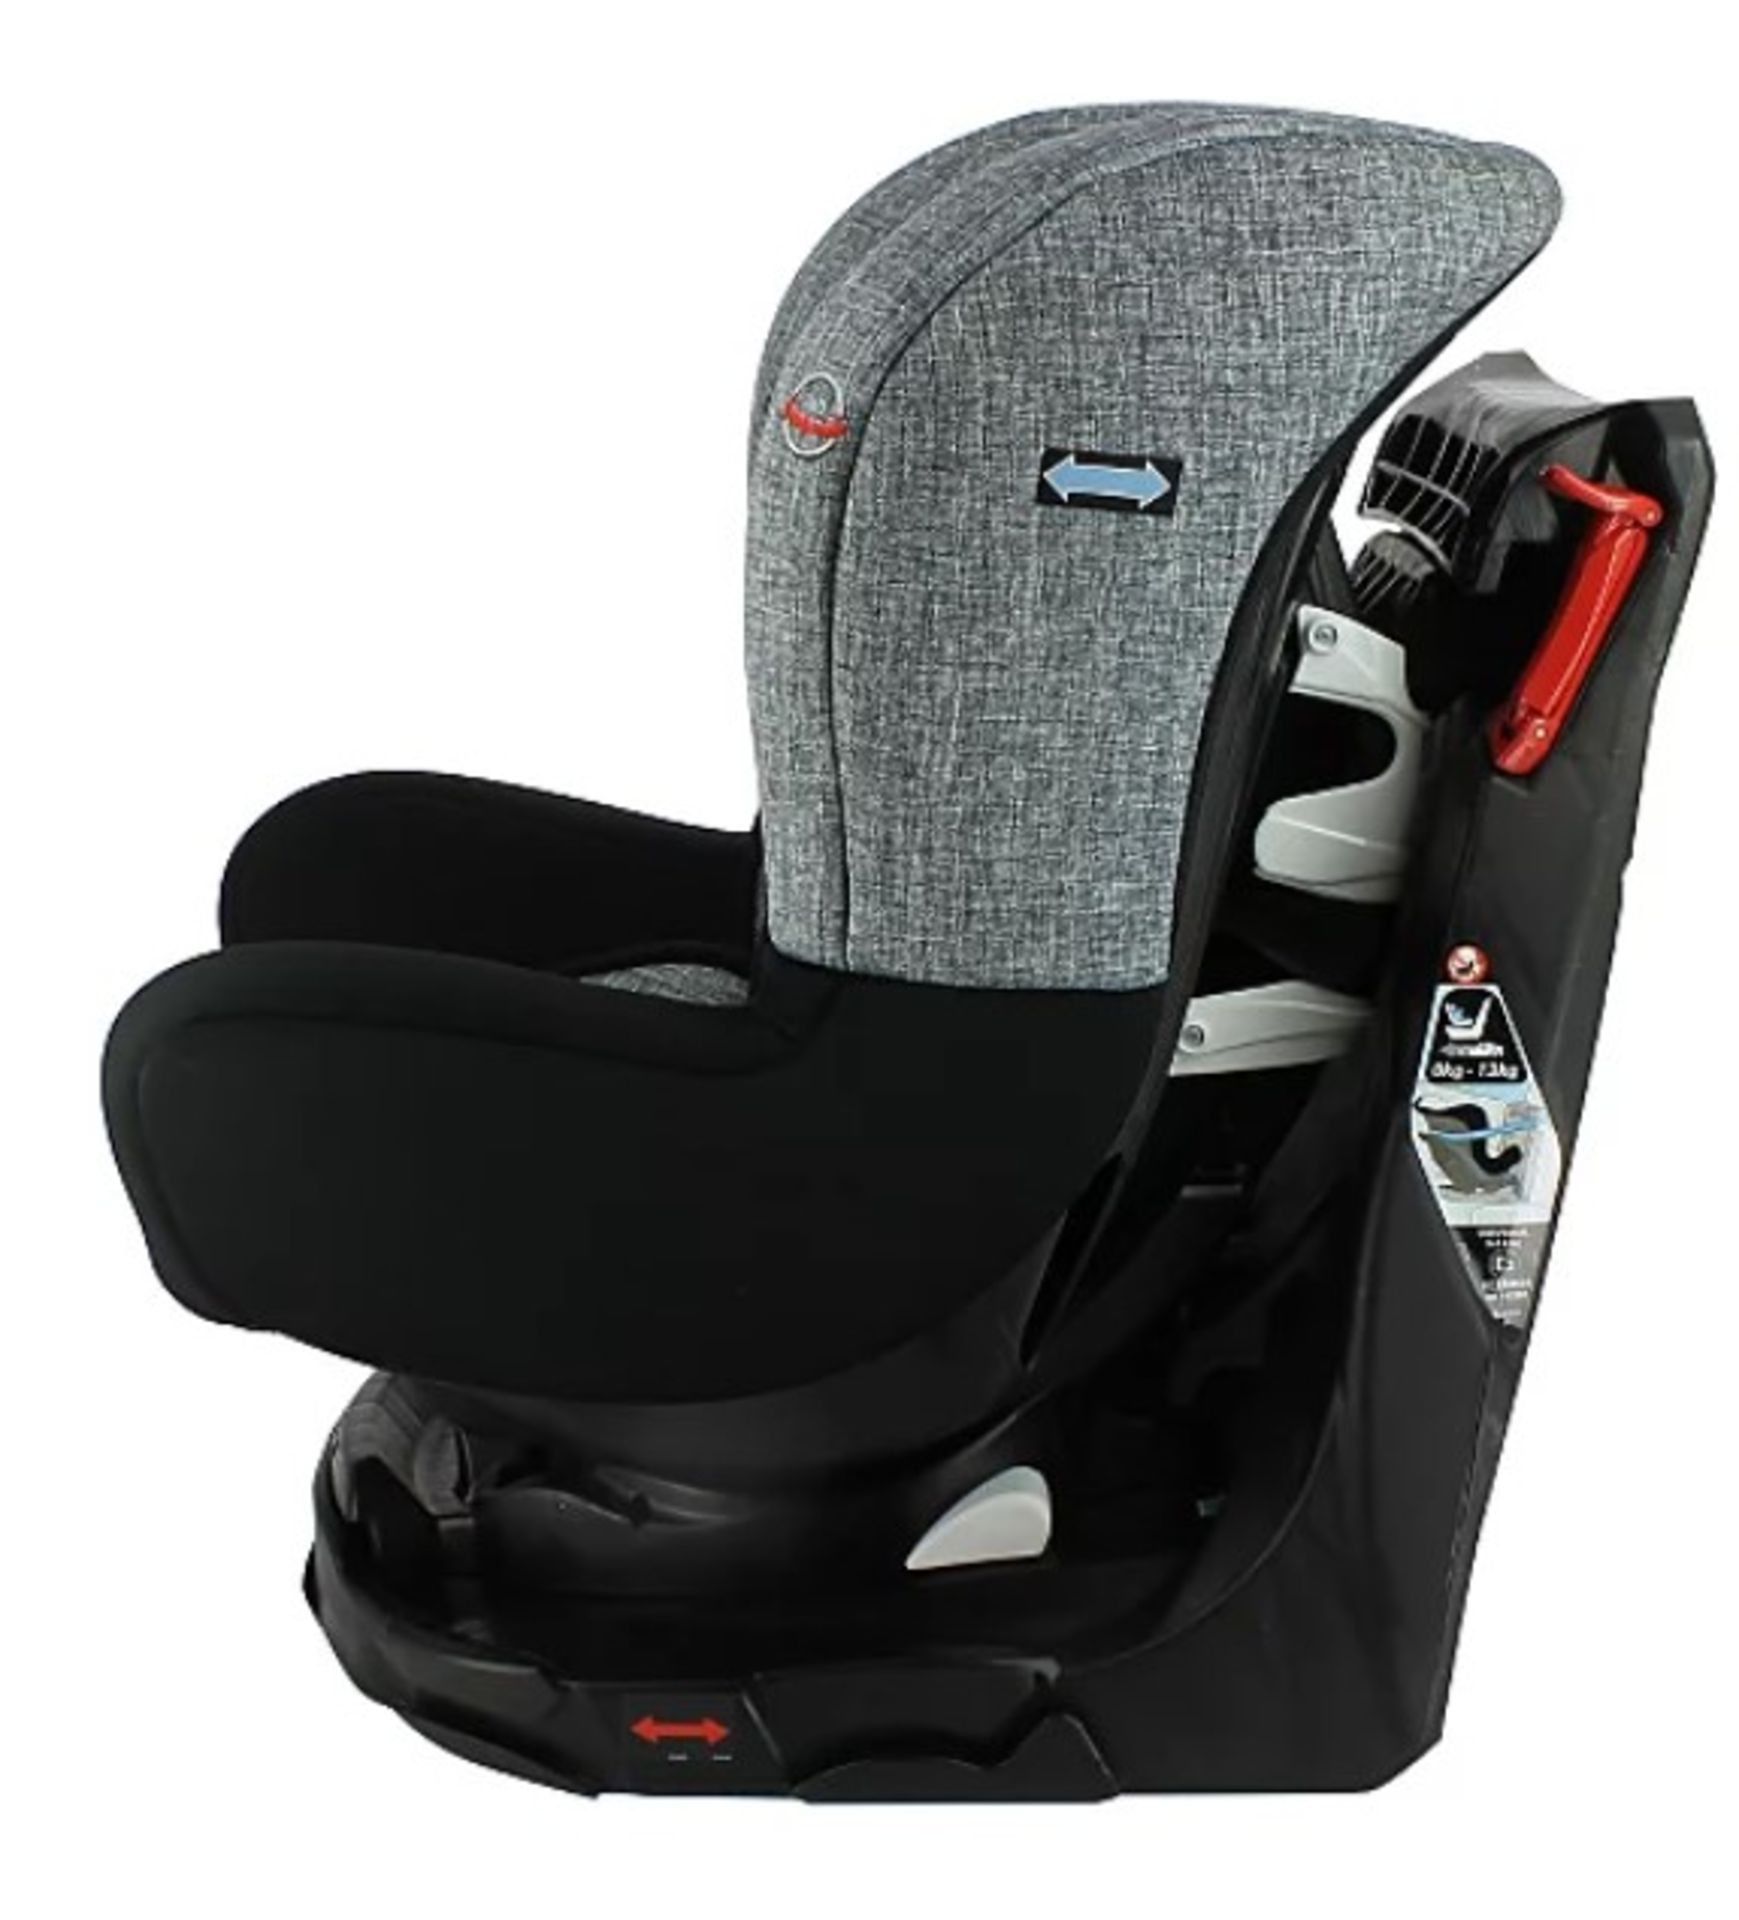 Description: (6/6J) 2x Nania Baby Car Seats To Include 1x Nania Revo Sp 0-18kg 360 Swivel Car Seat - Image 2 of 15